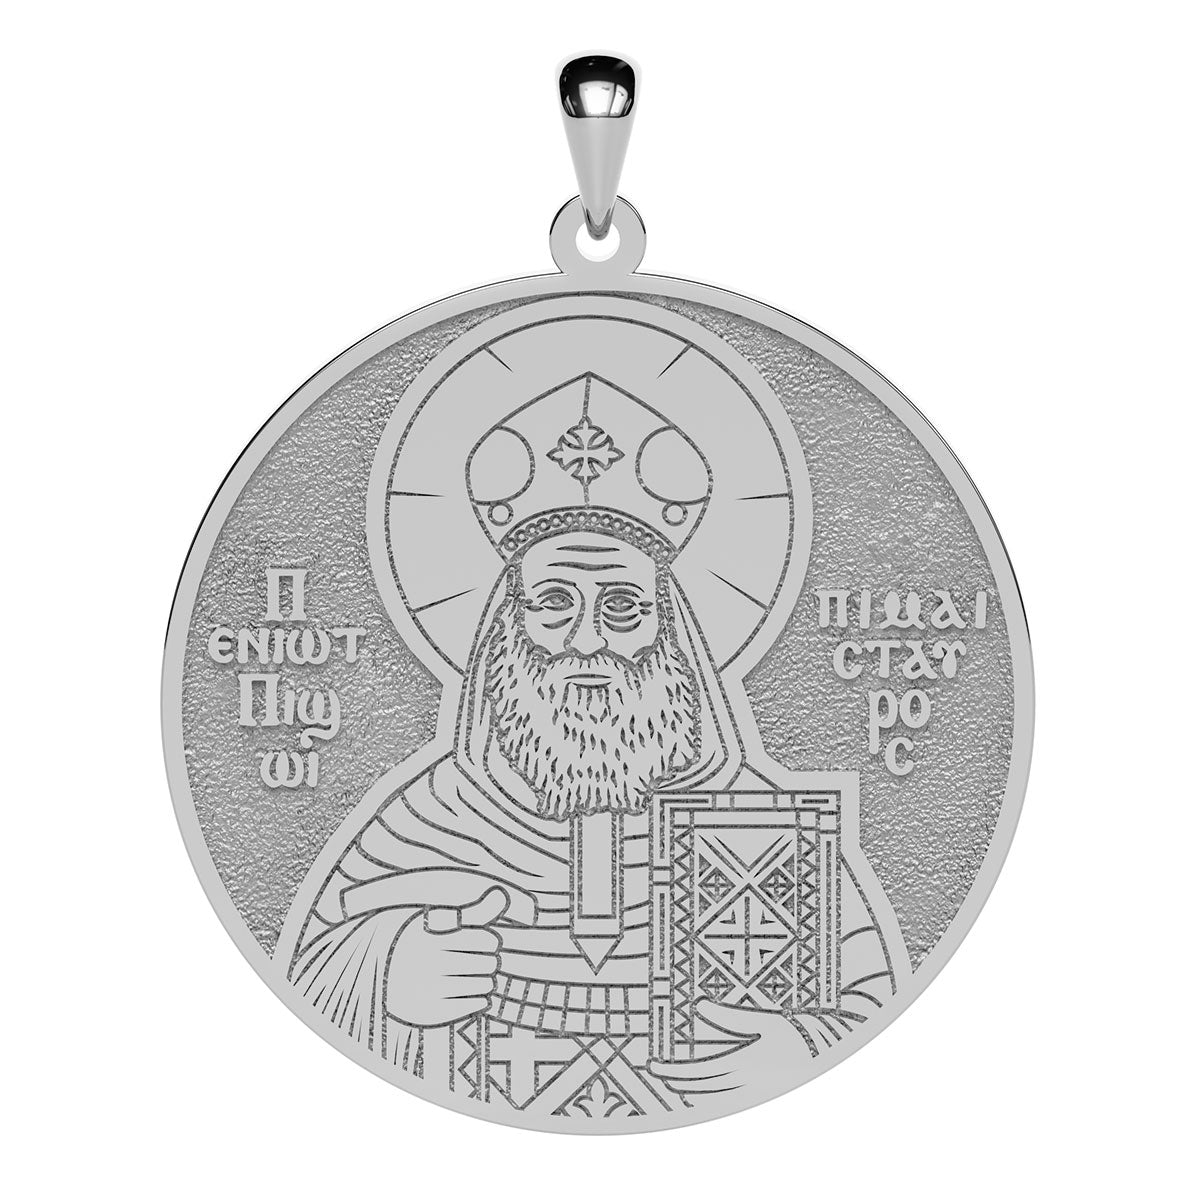 Saint Bishoy Coptic Orthodox Icon Round Medal